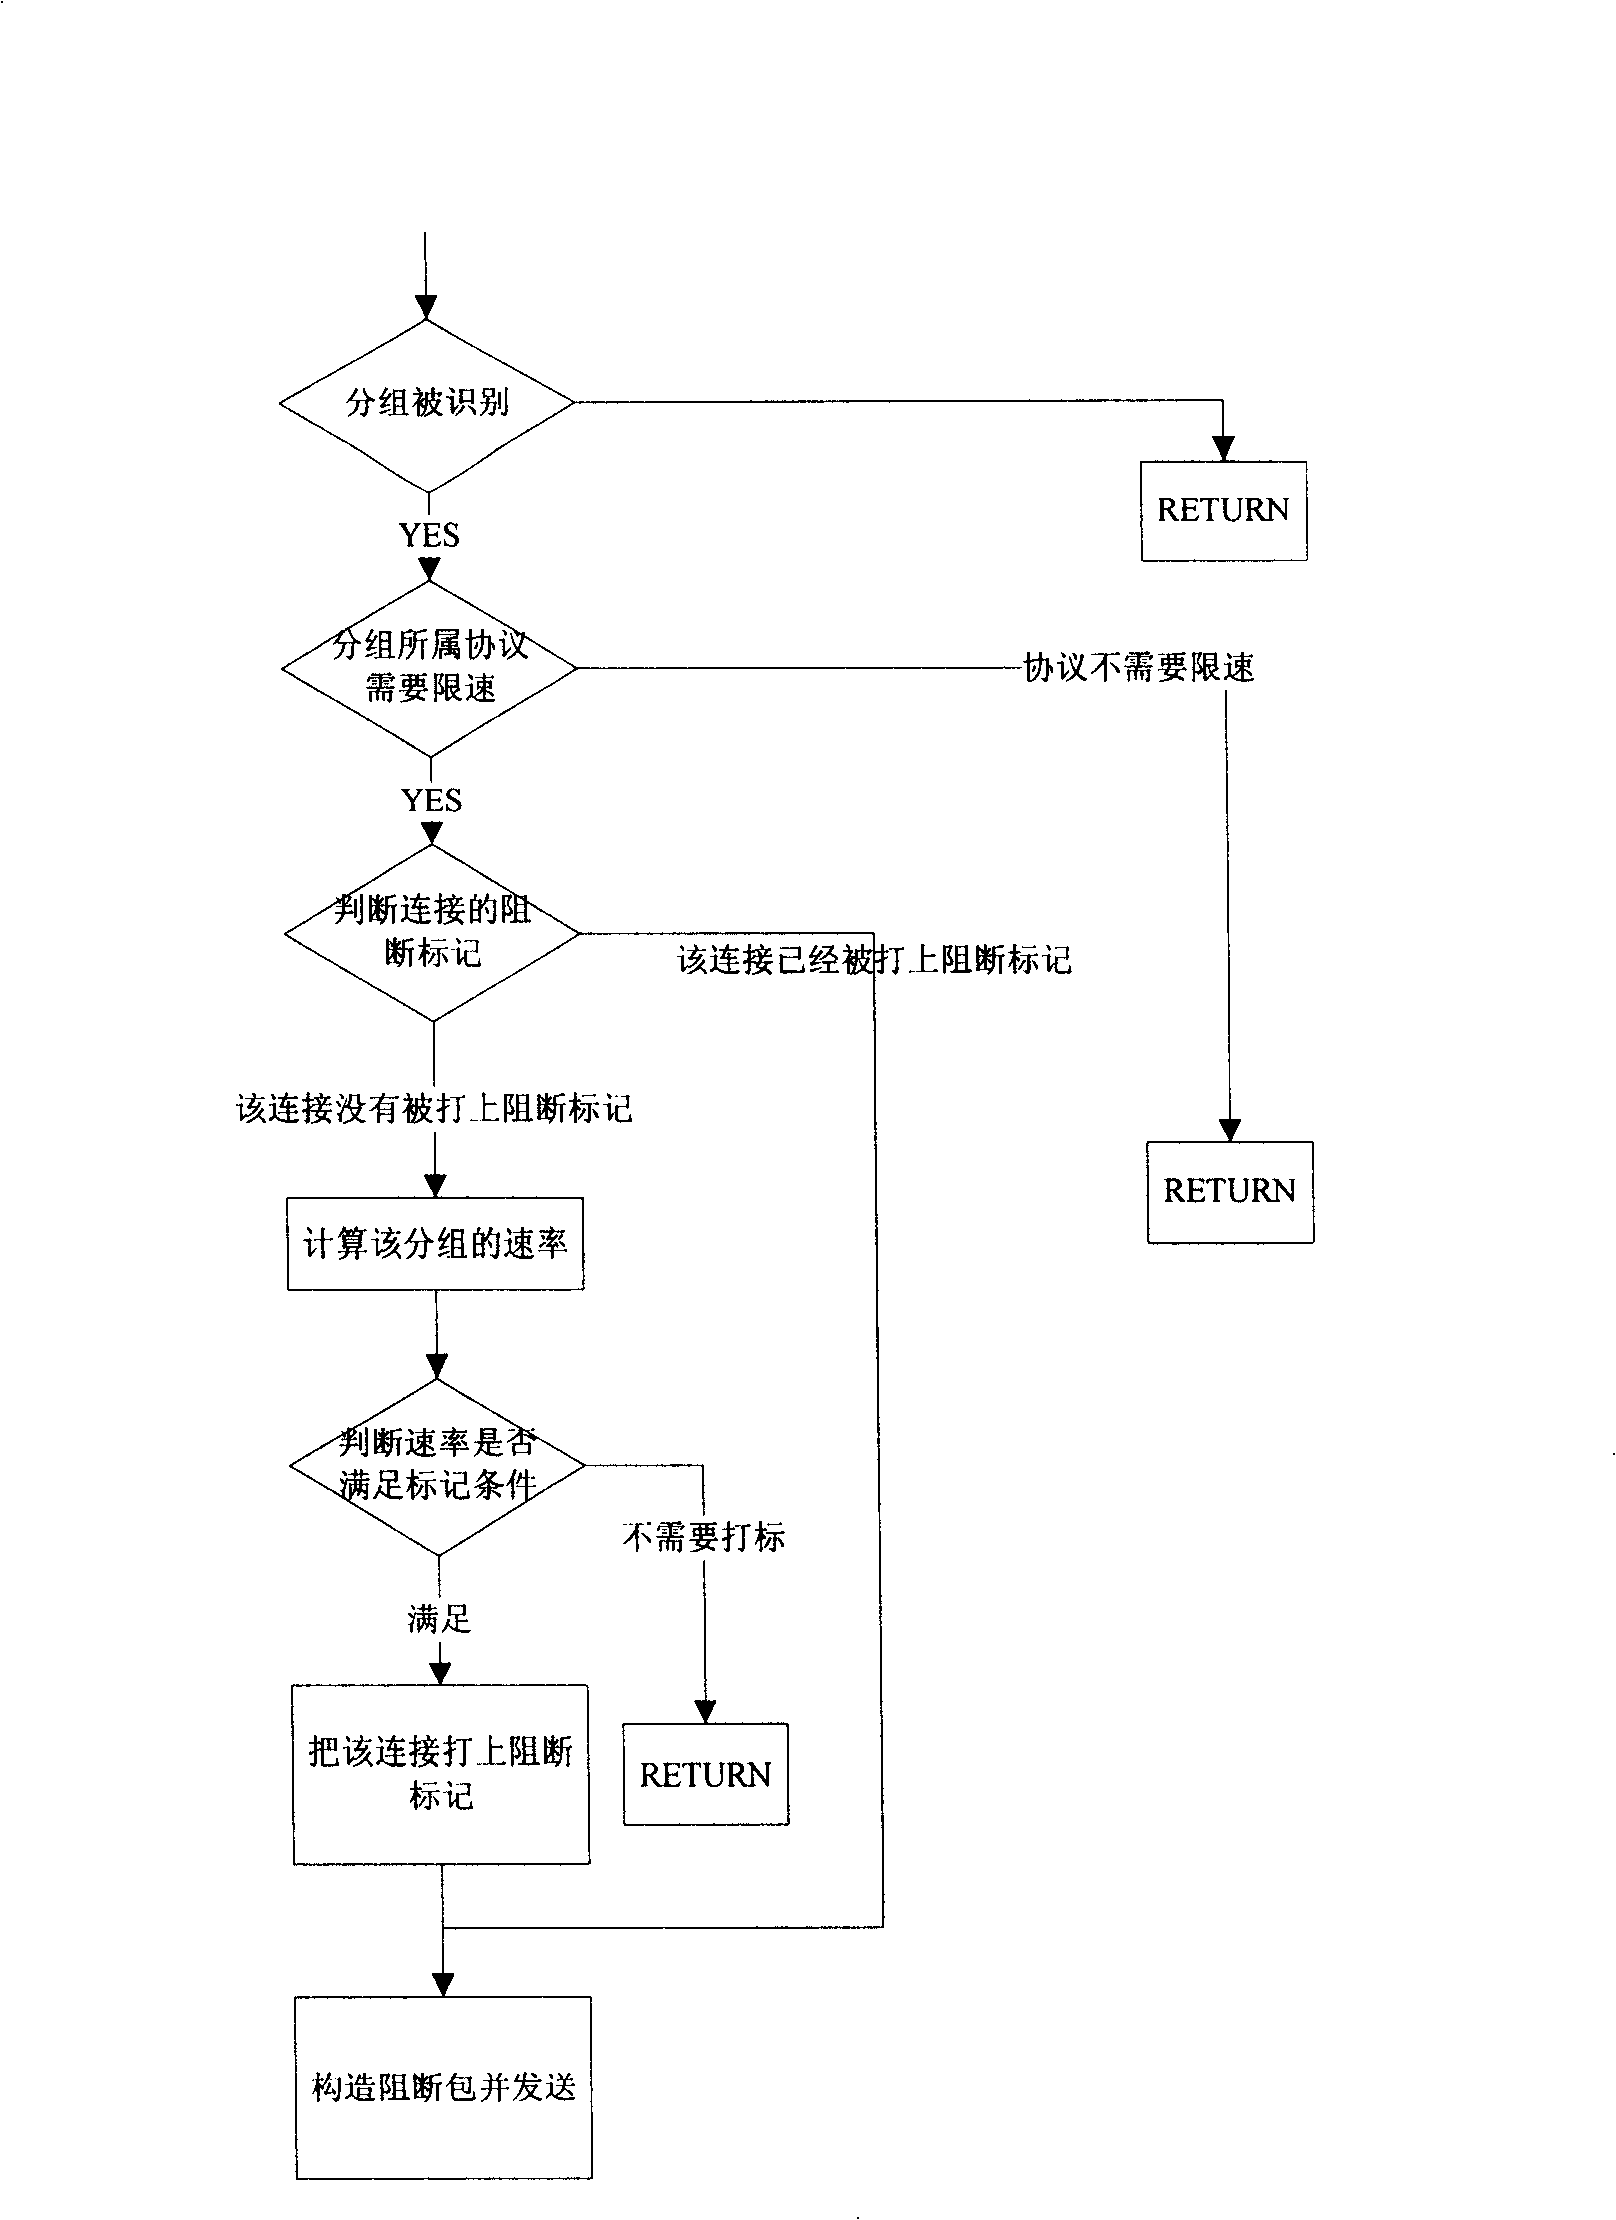 Network flow detection method